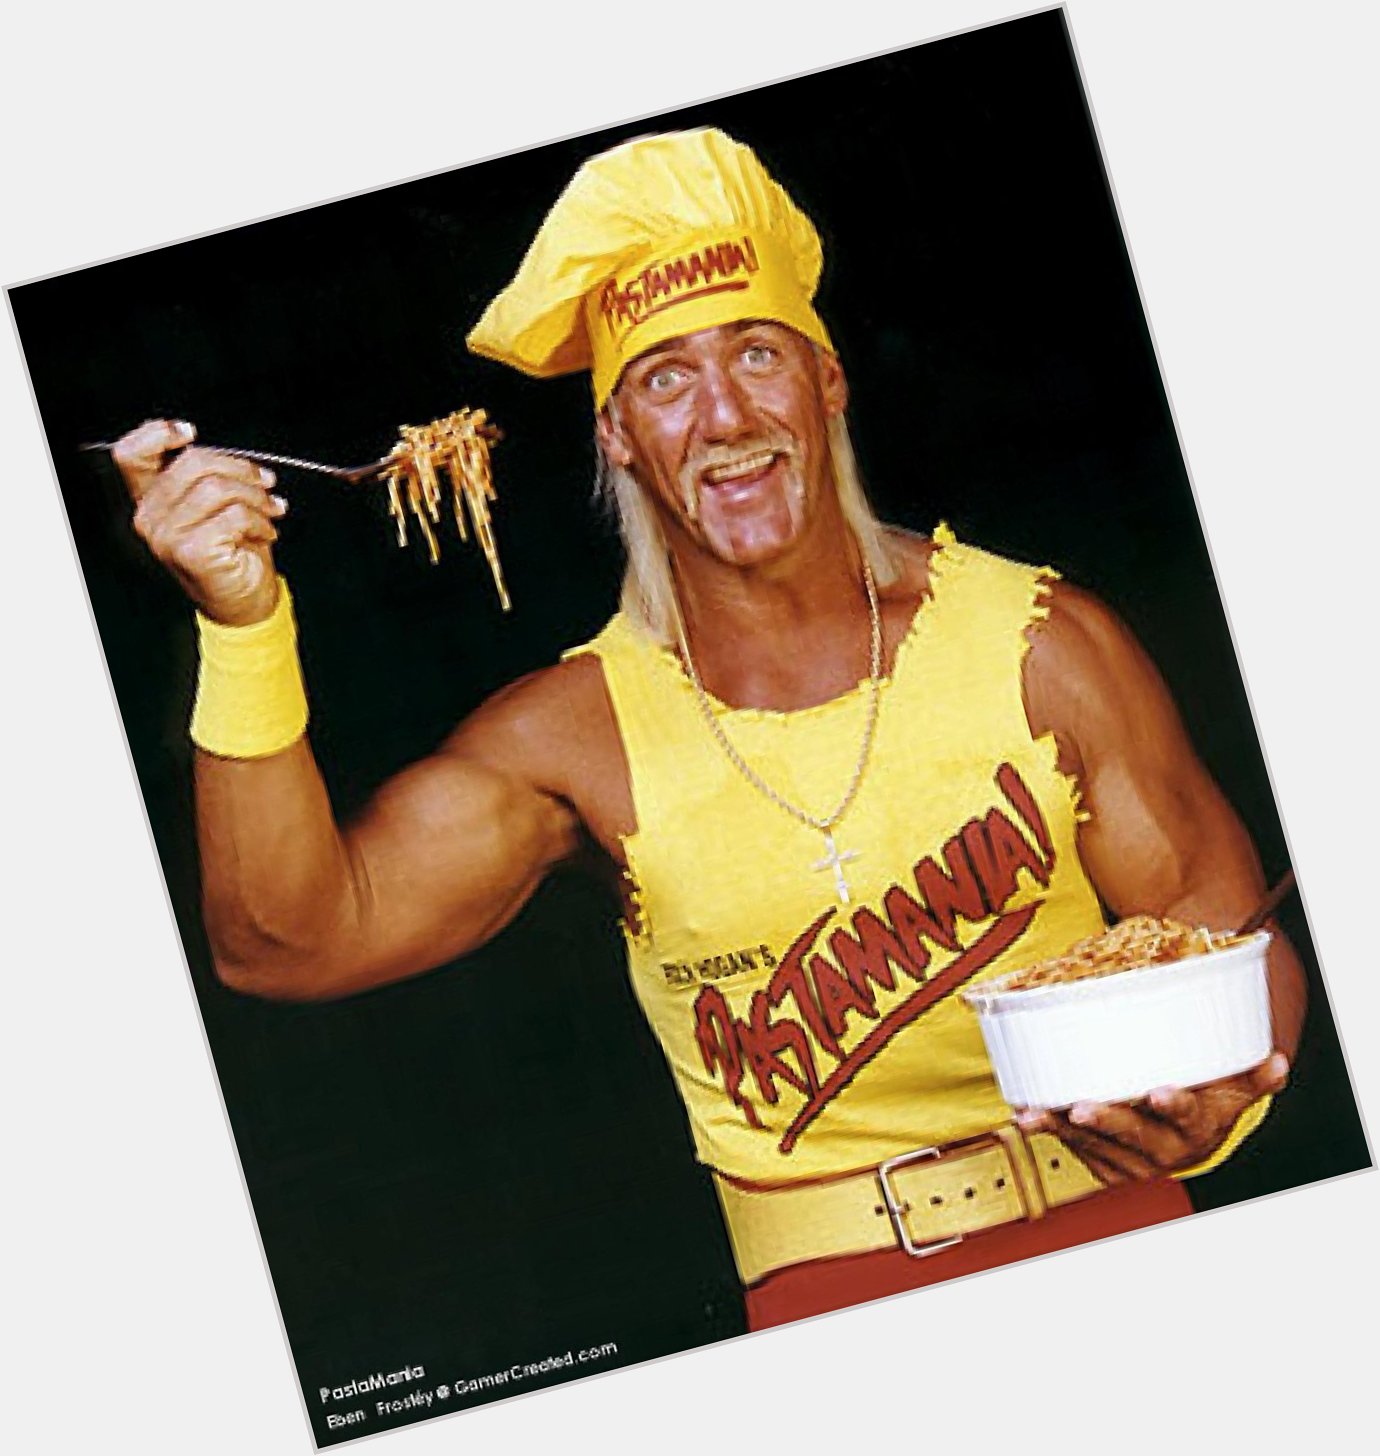 Happy Birthday to Hulk Hogan who turns 64 today! 